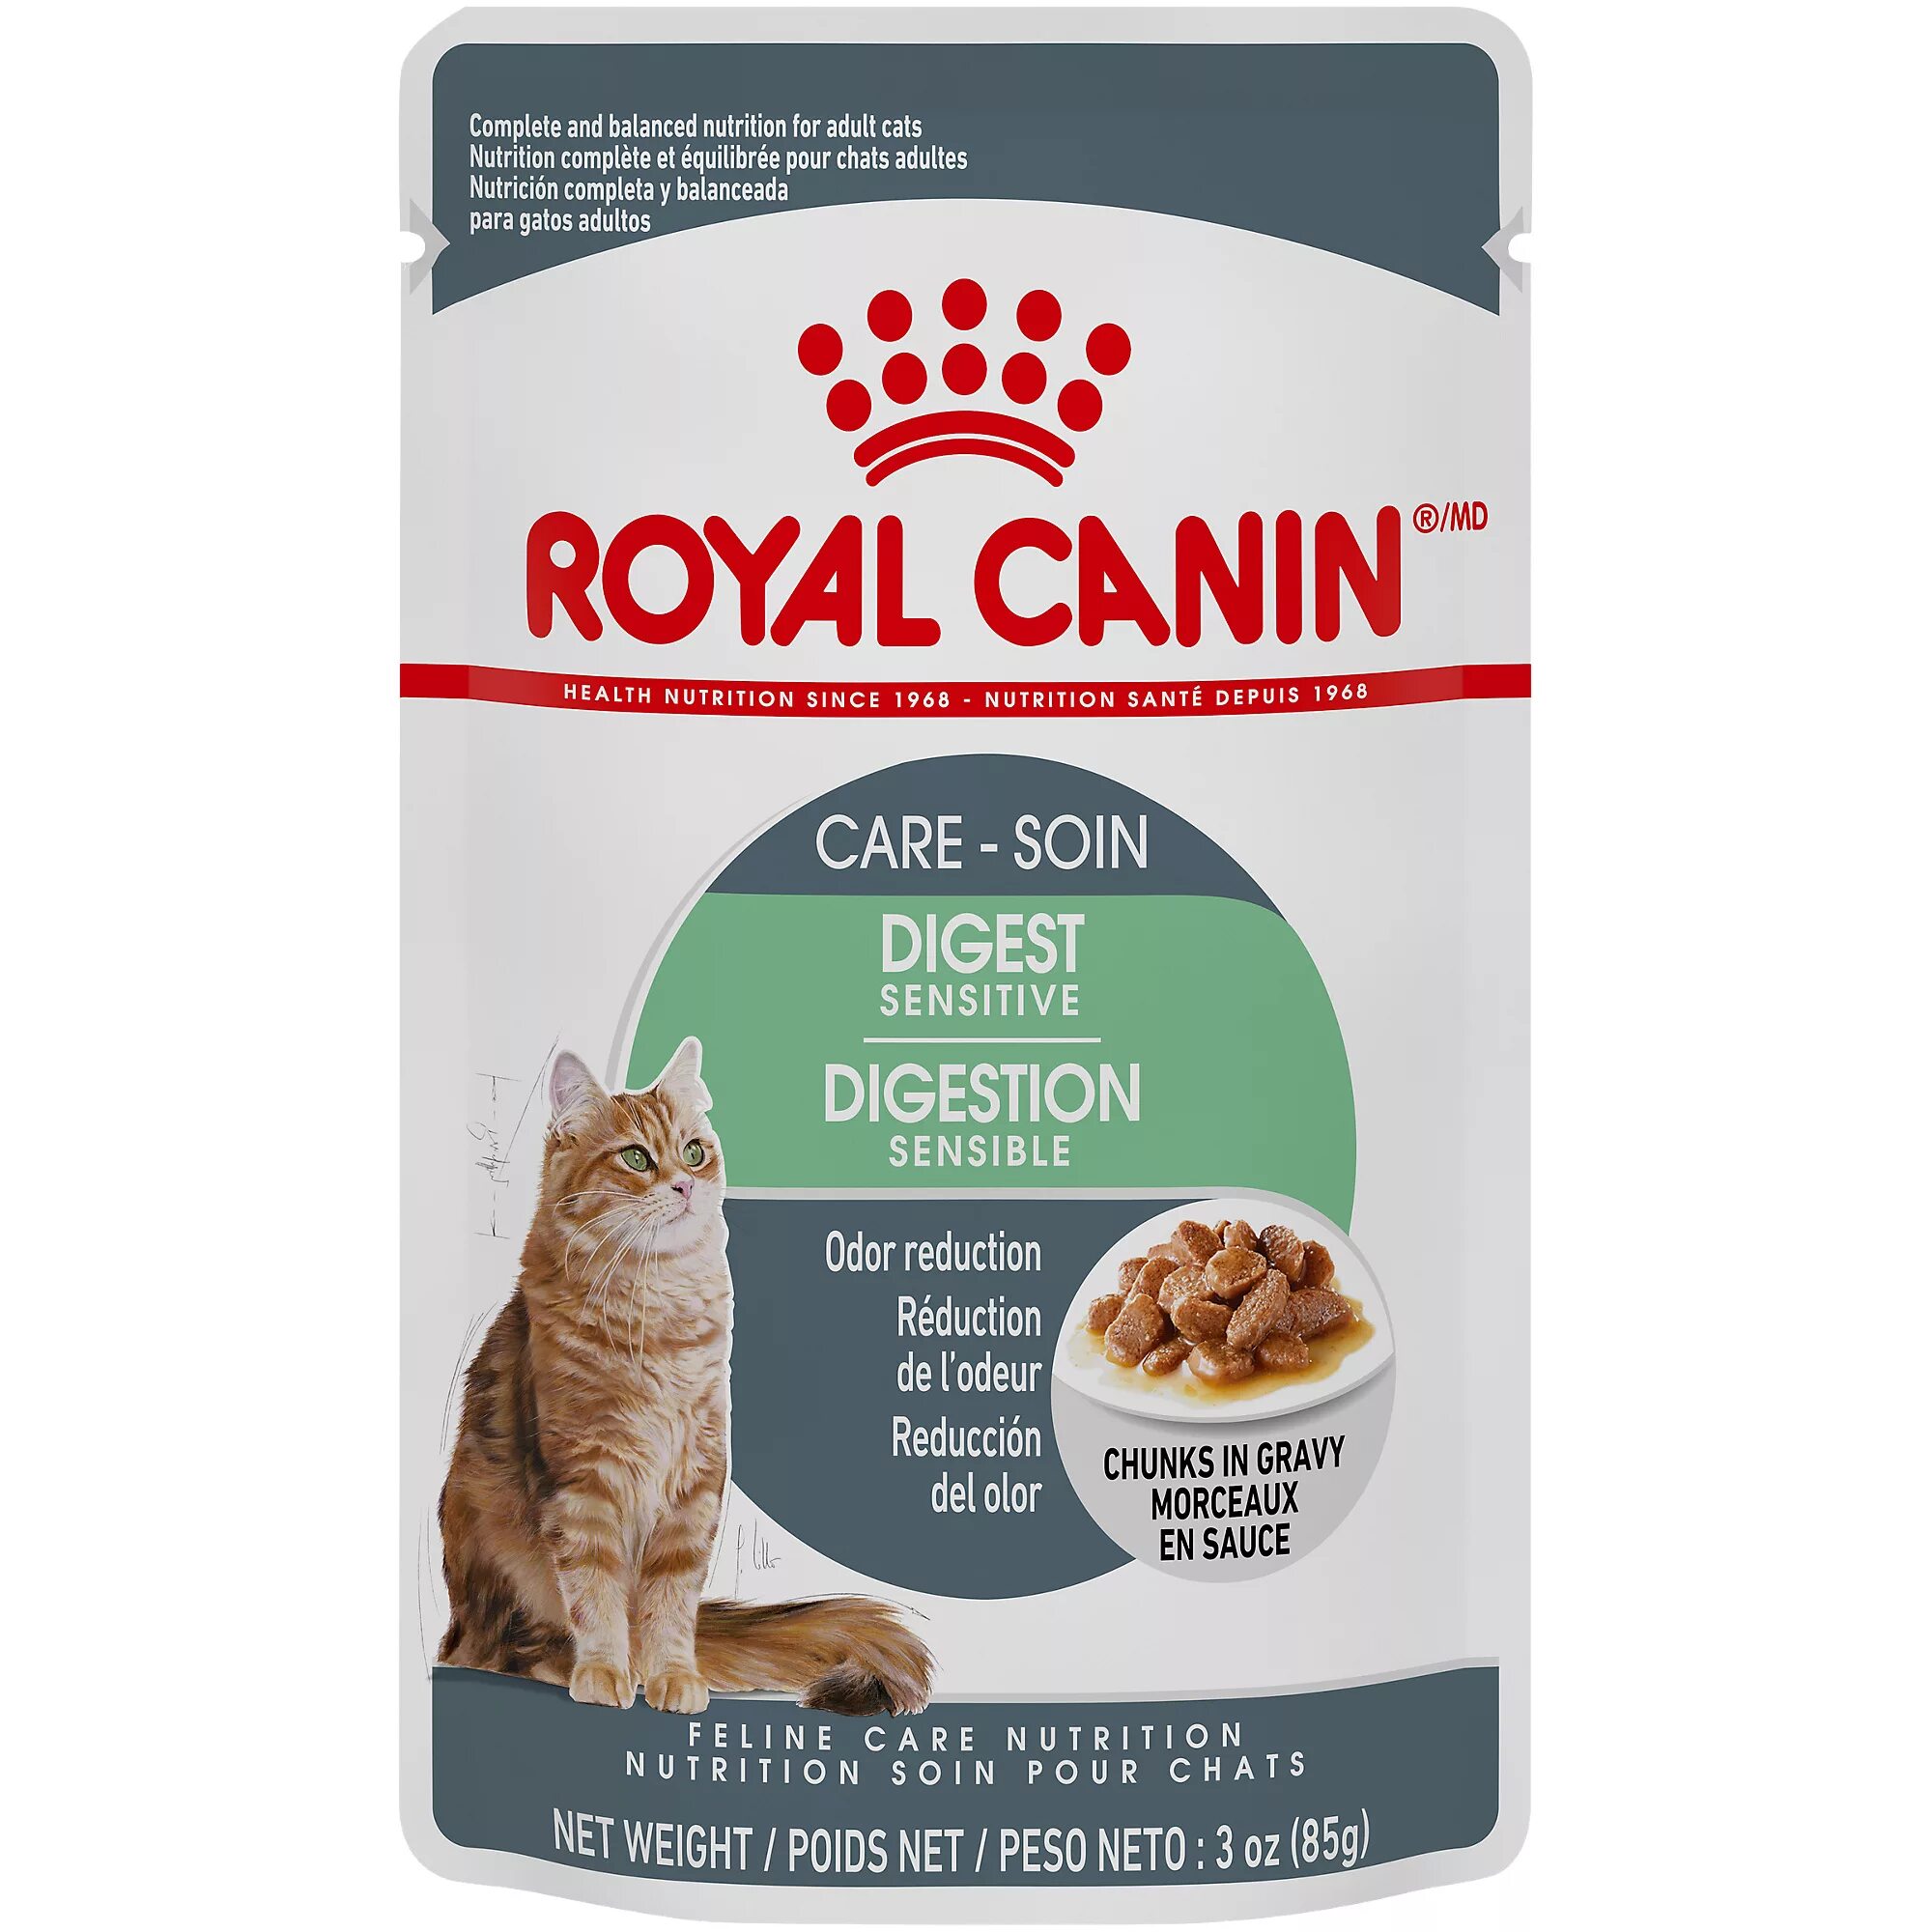 Royal canin digestive для кошек. Digest Роял Канин для кошек. Роял Канин кошек Digestive Care влажный. Роял Канин Сенситив для кошек паучи. Digest sensitive Royal Canin для кошек.